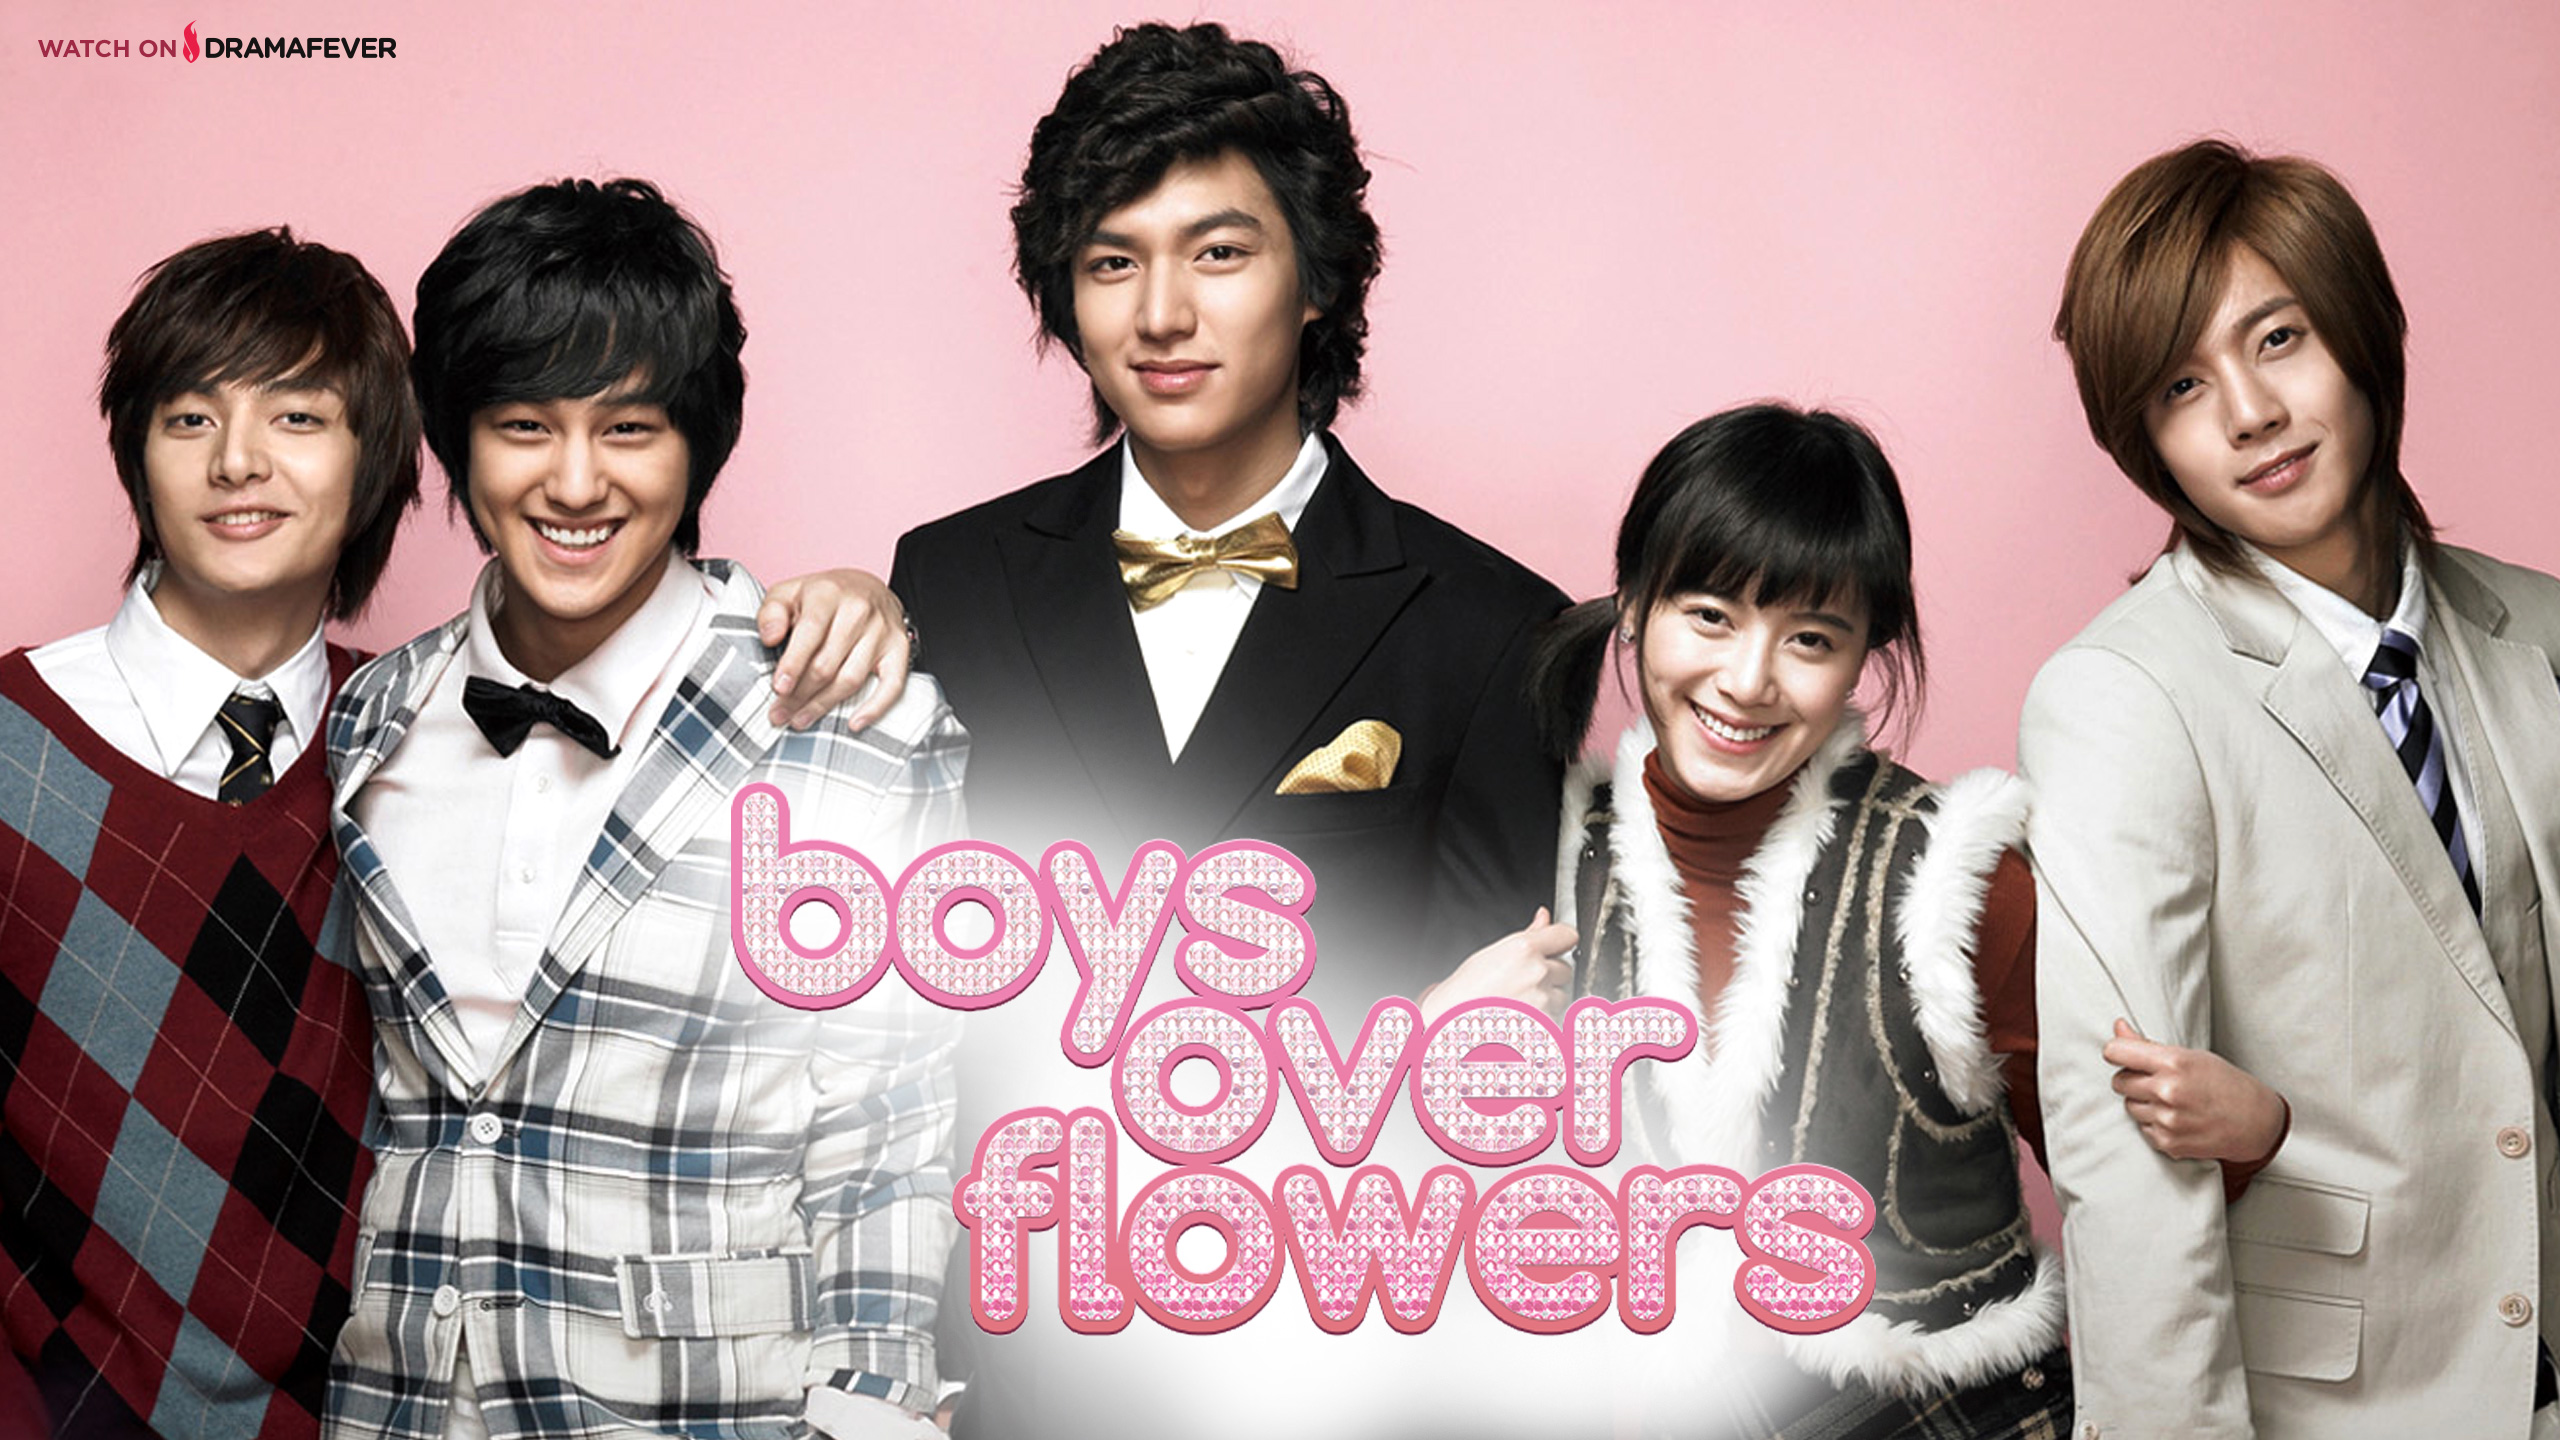 Boys Over Flowers Wallpaper For Your Desktop iPhone iPad